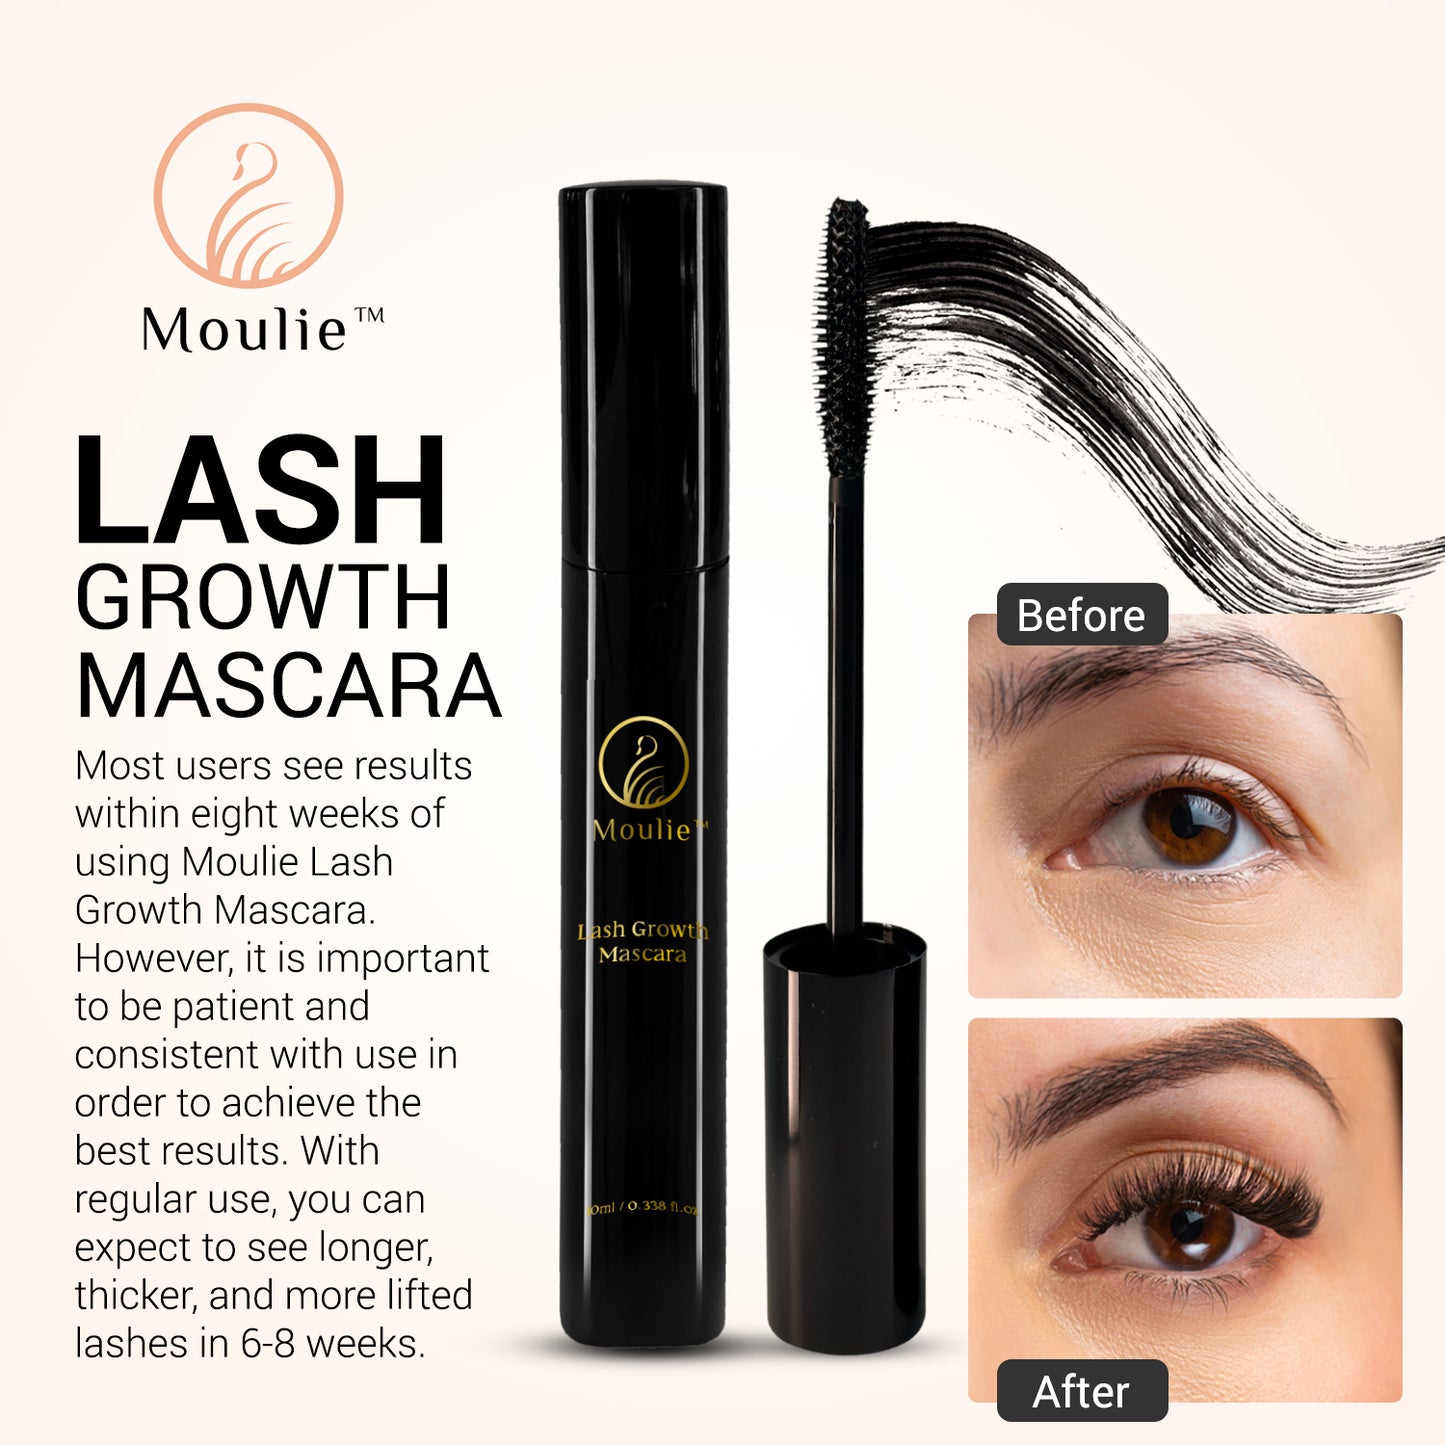 Moulie Lash Growth Mascara